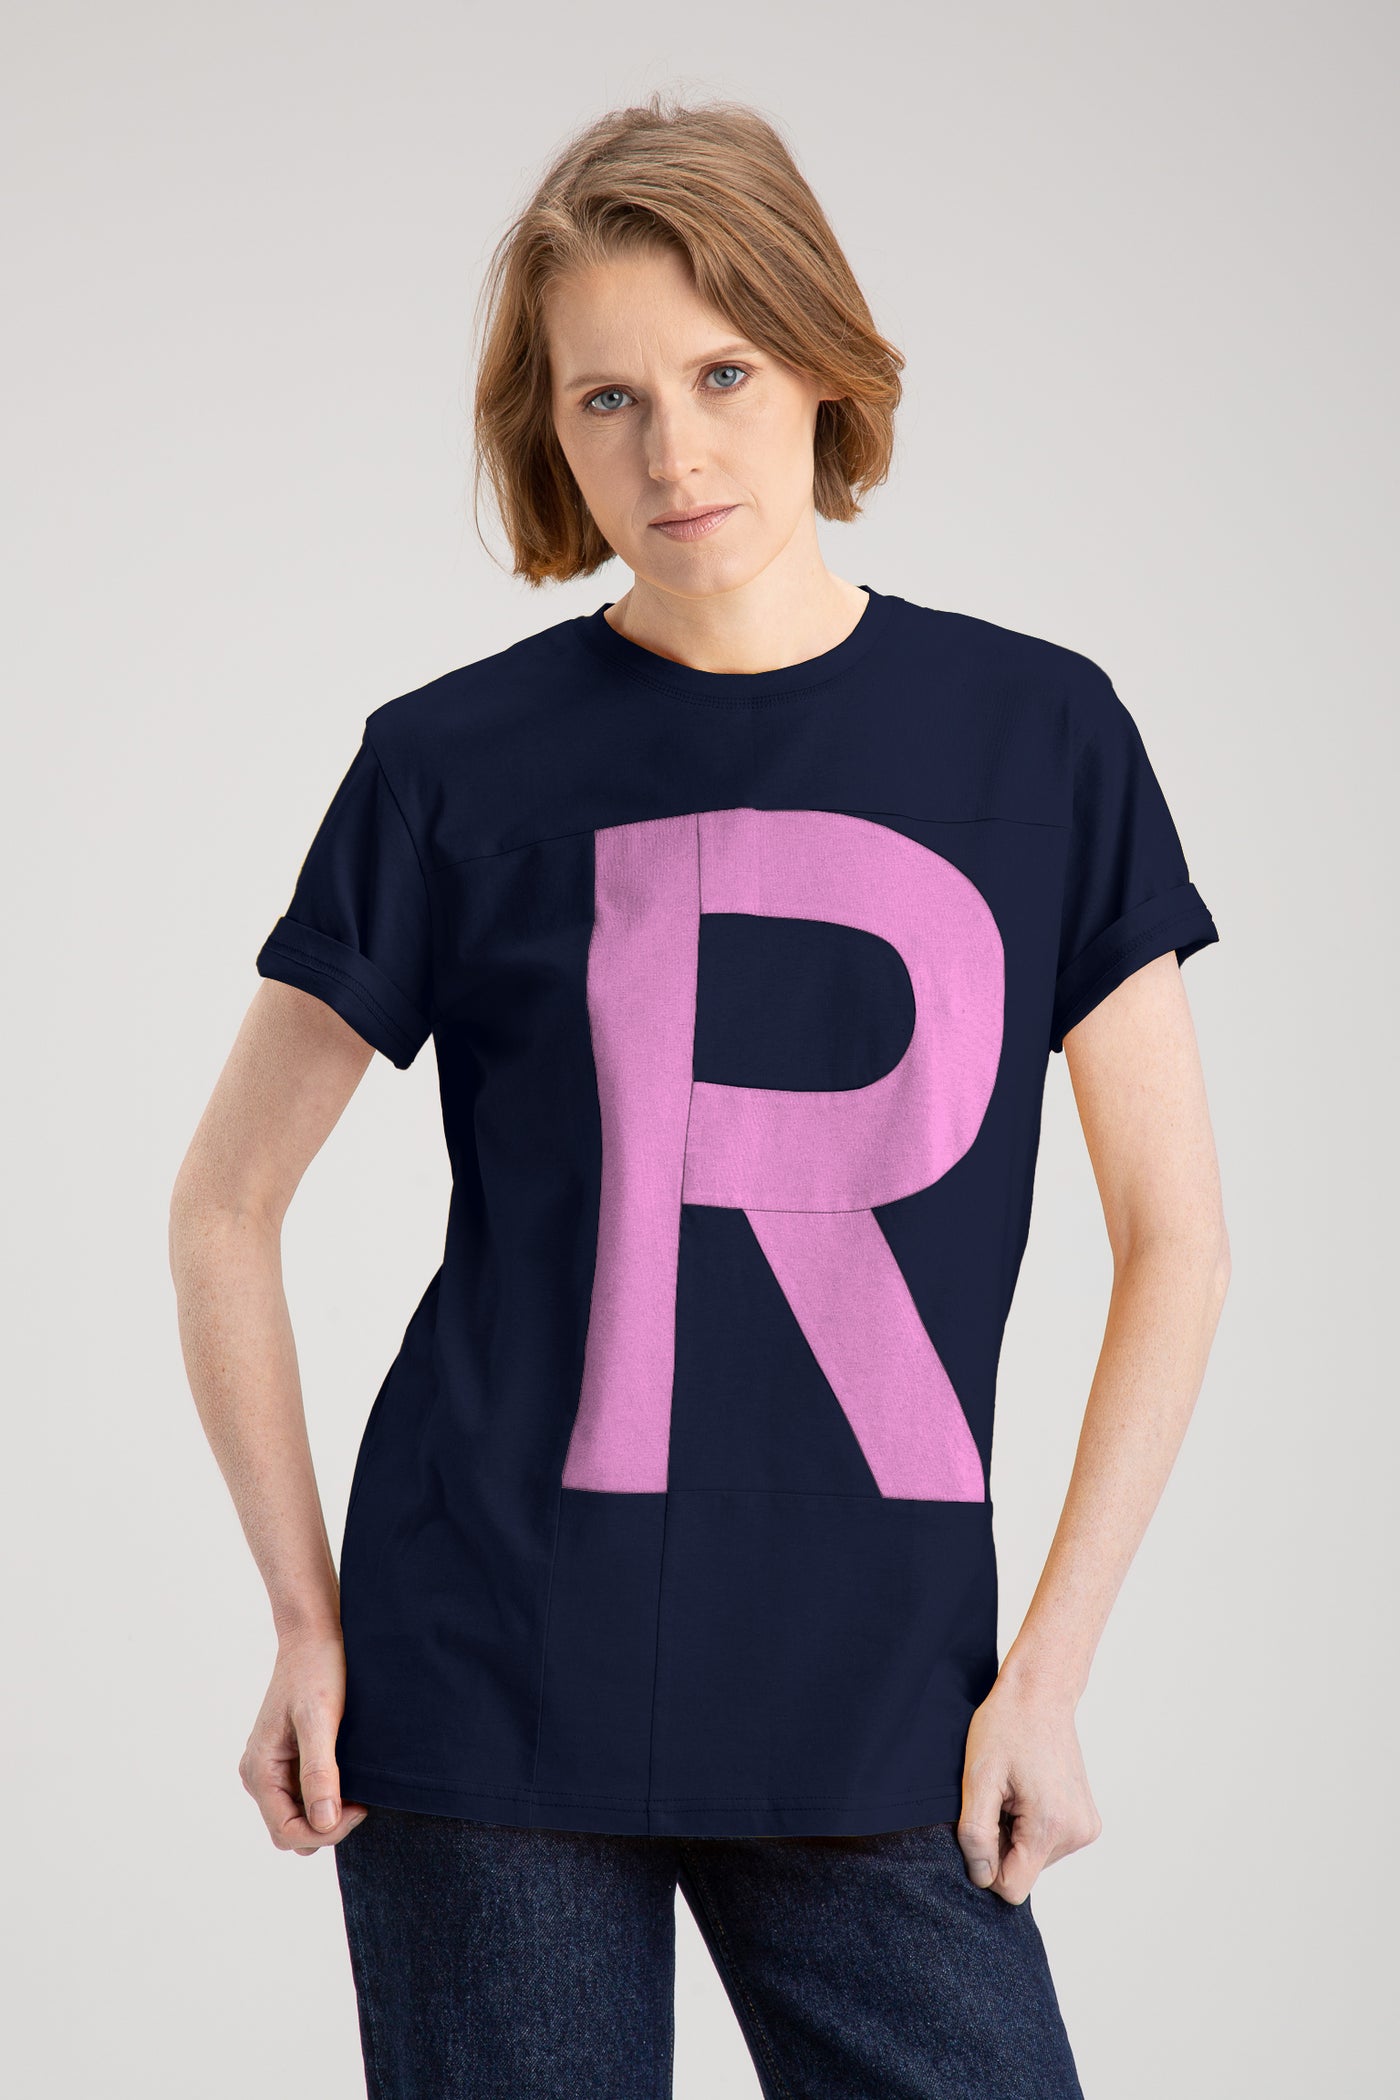 Up-Shirt für Damen - R Motiv | Blau, Rosa